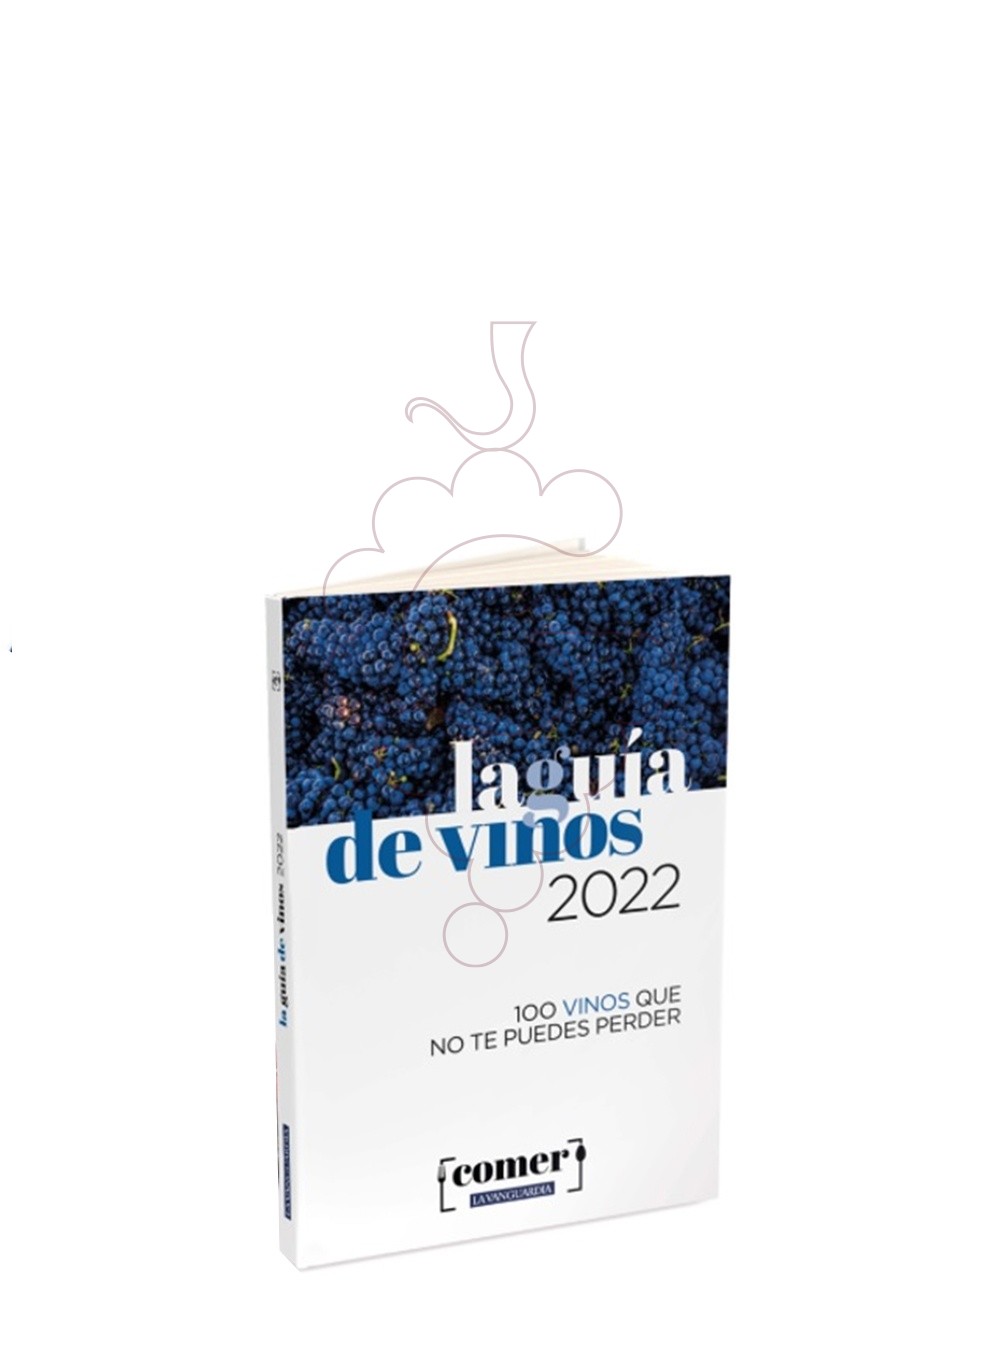 Photo Librairie La guia vinos 2022 vanguardia